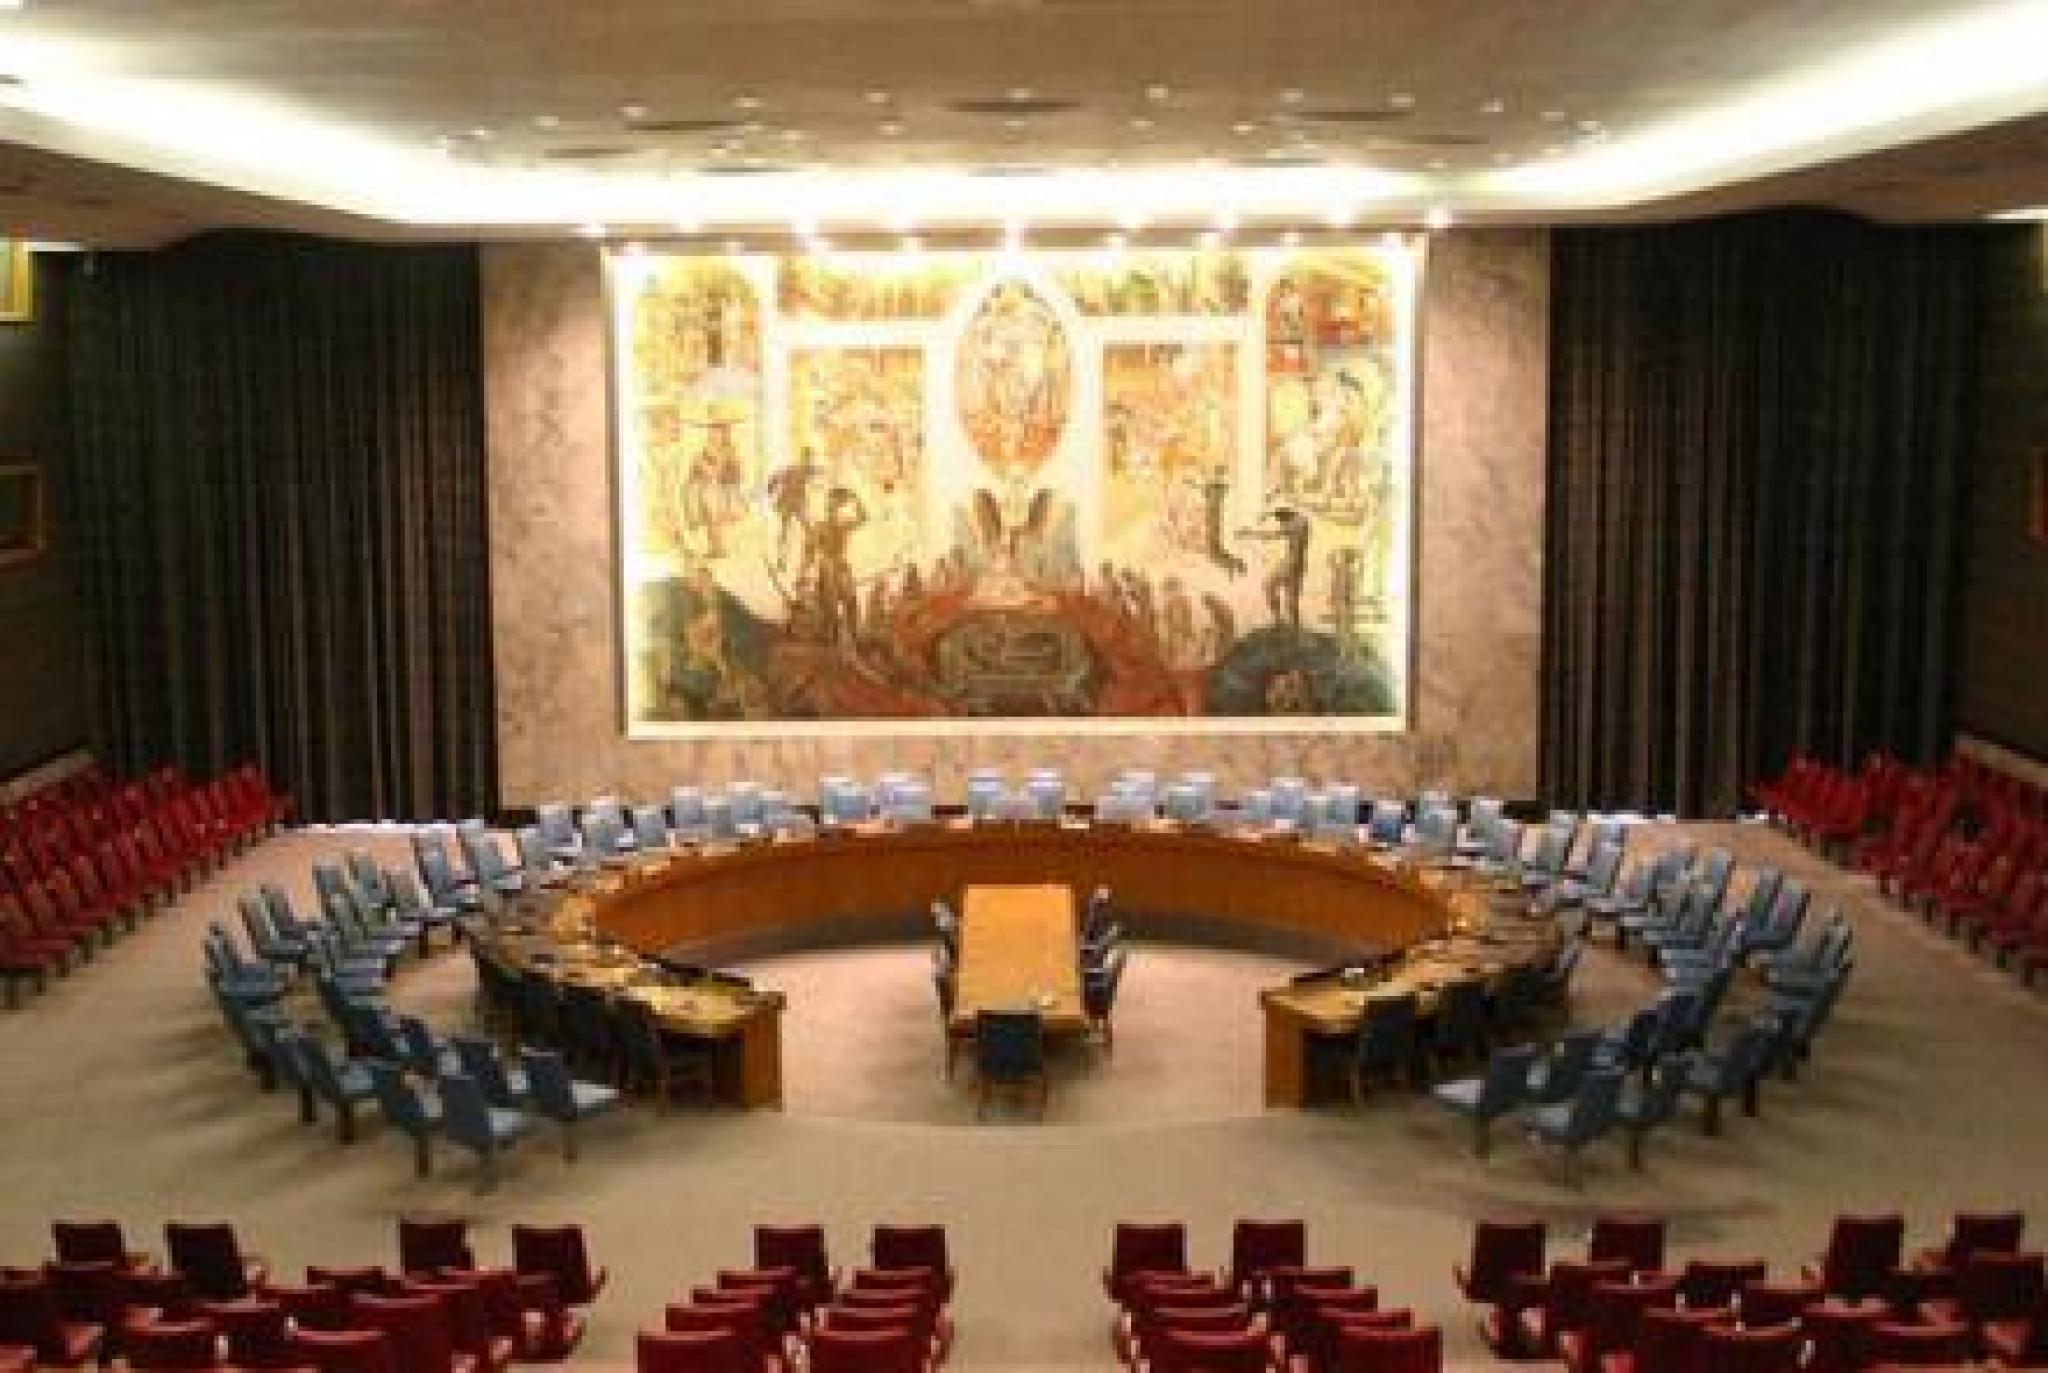 Image: UN Security Council by Partick Gruban Flickr under CC-BY-SA-2.0